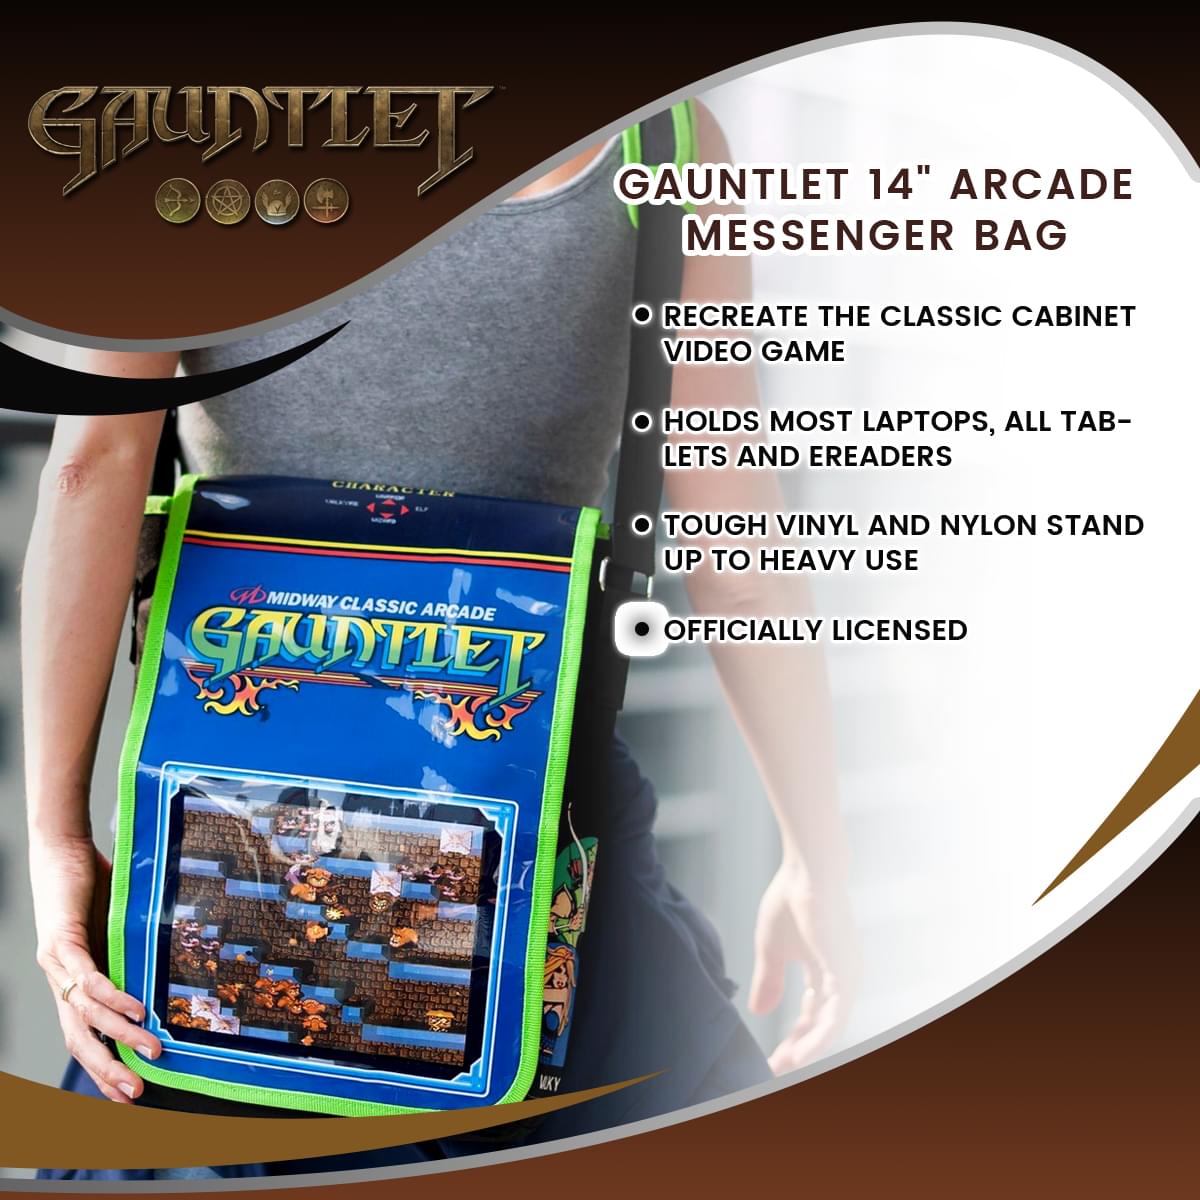 Gauntlet 14" Arcade Messenger Bag